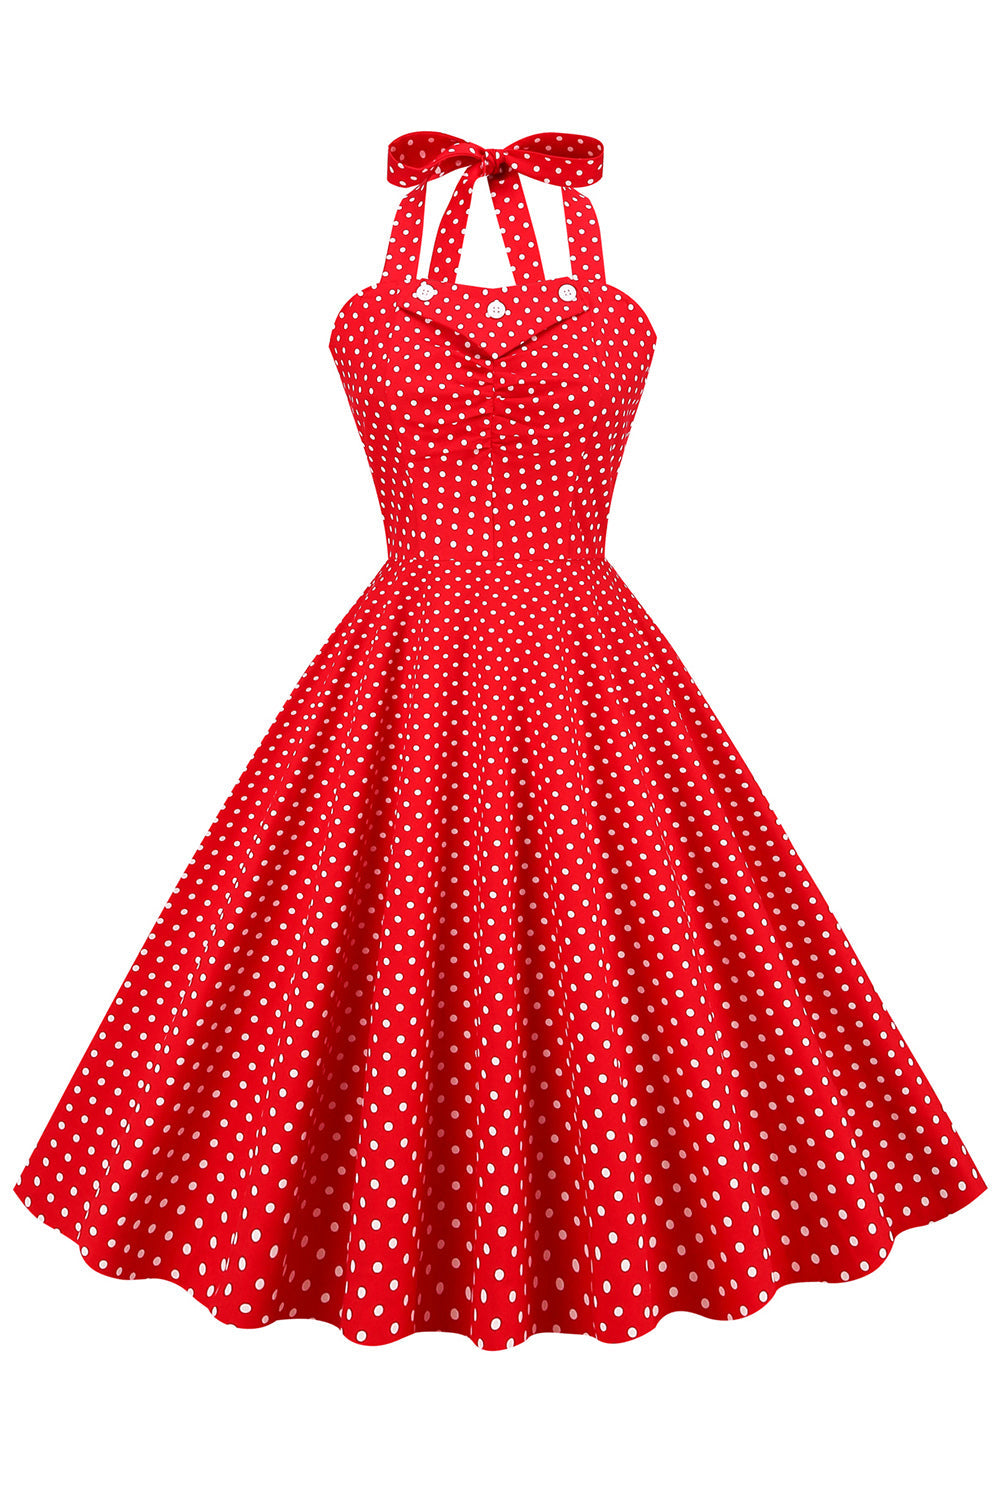 retro stil grime rød polka prikker 1950-tallet kjole